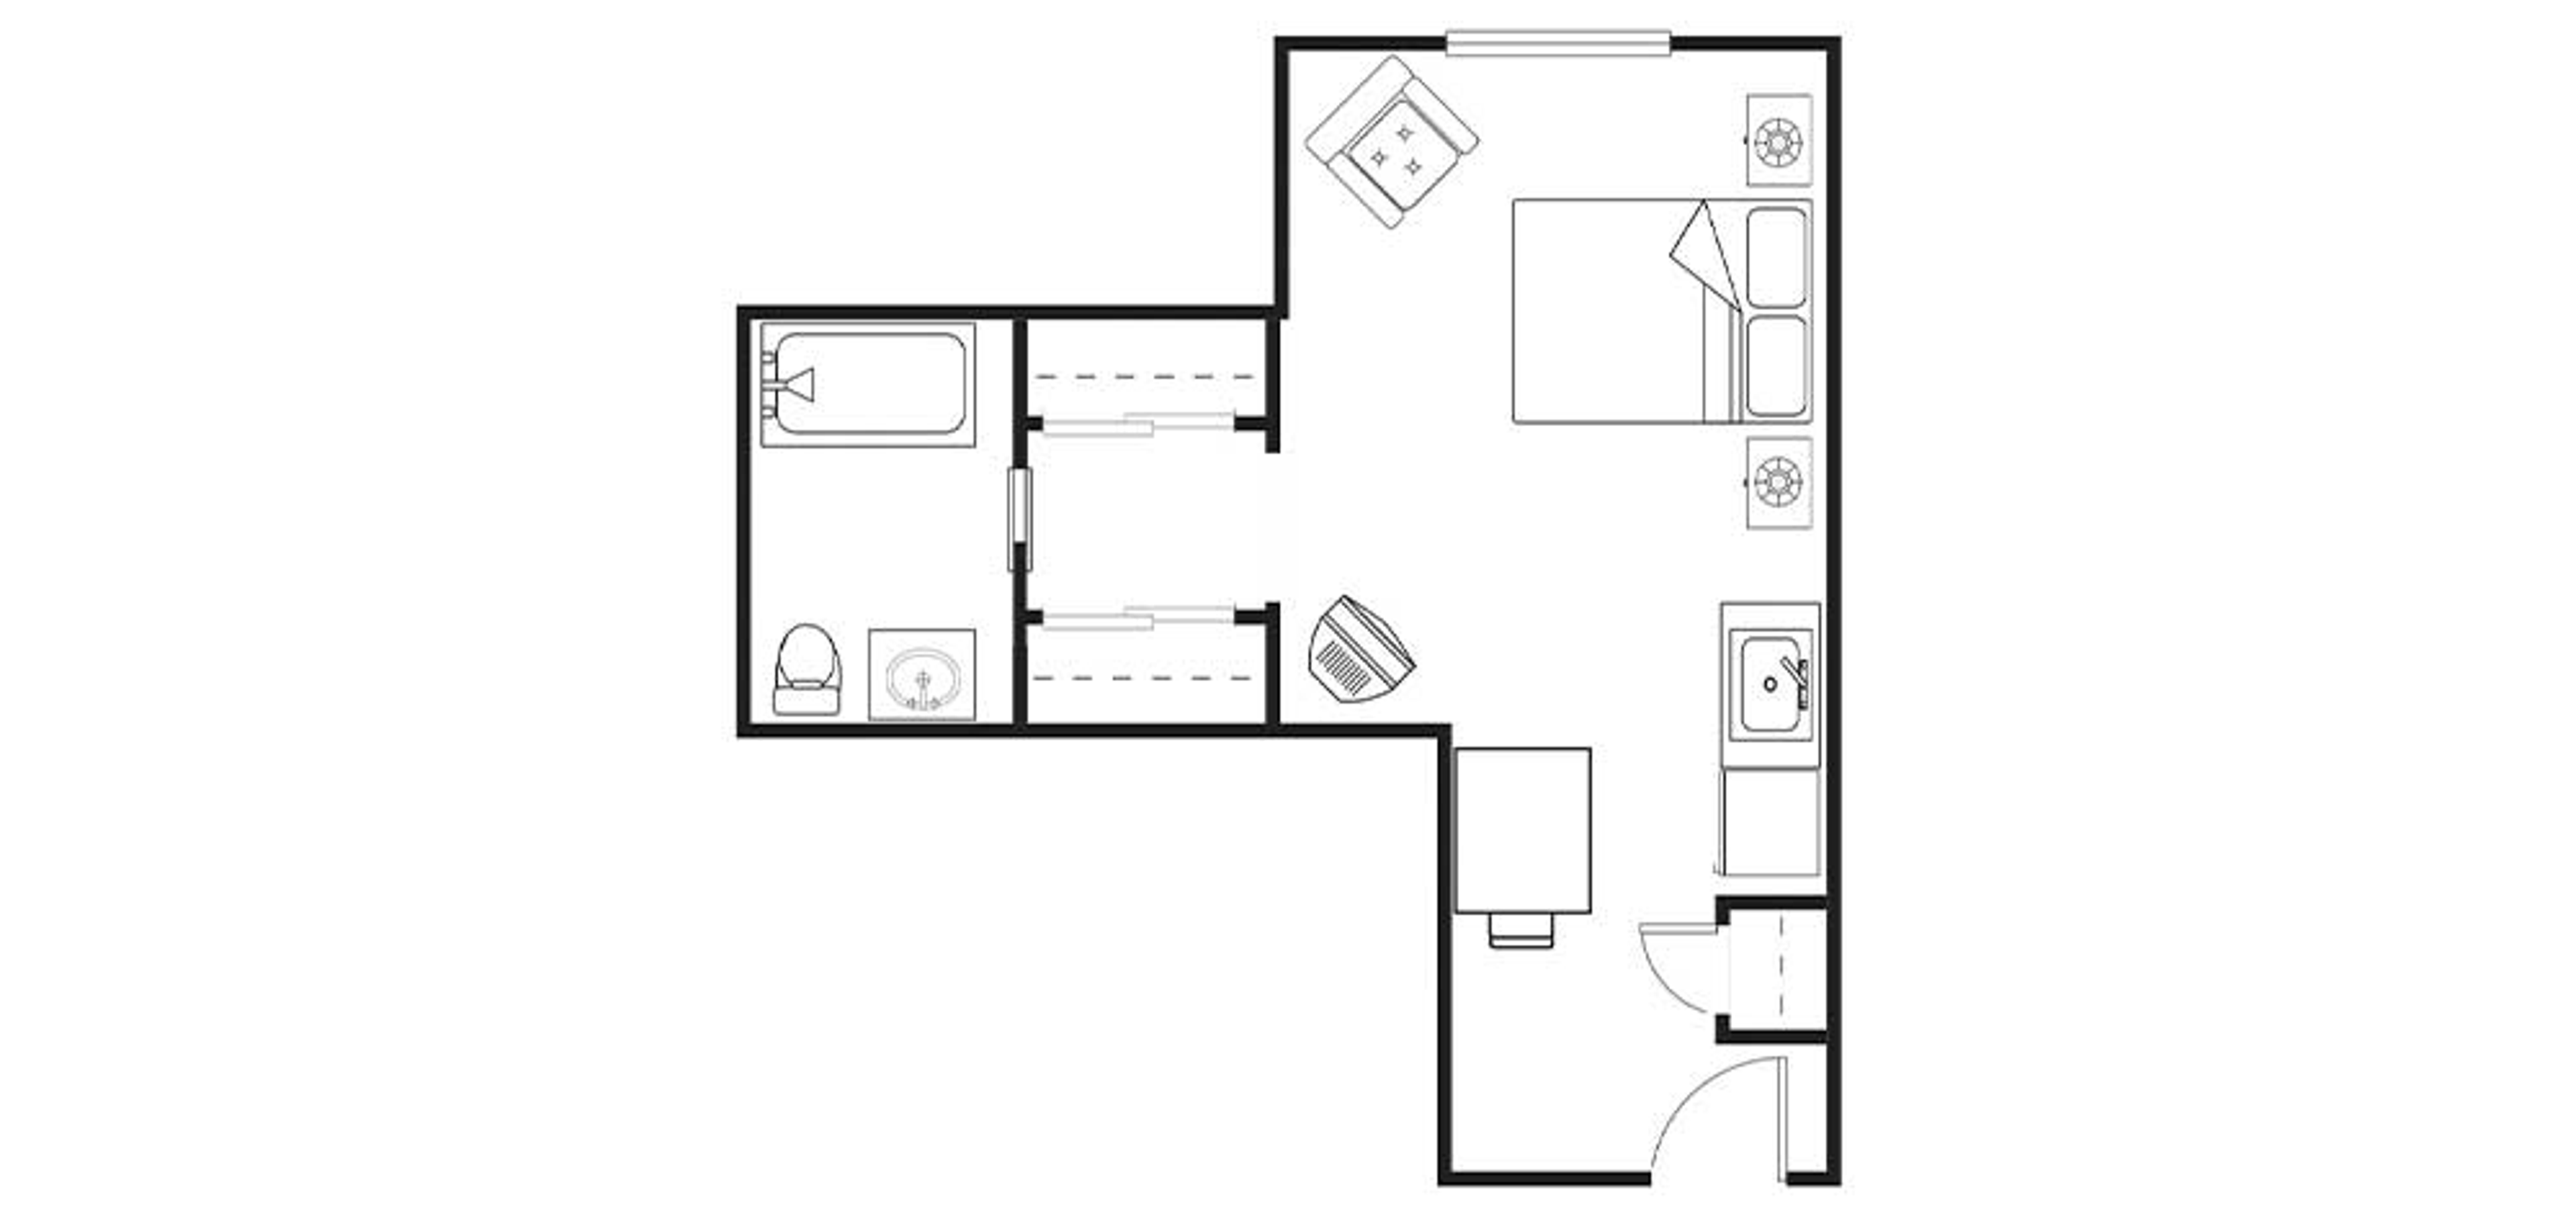 Floorplan - Redwood Heights - S2 Studio 385 sq. ft. Assisted Living